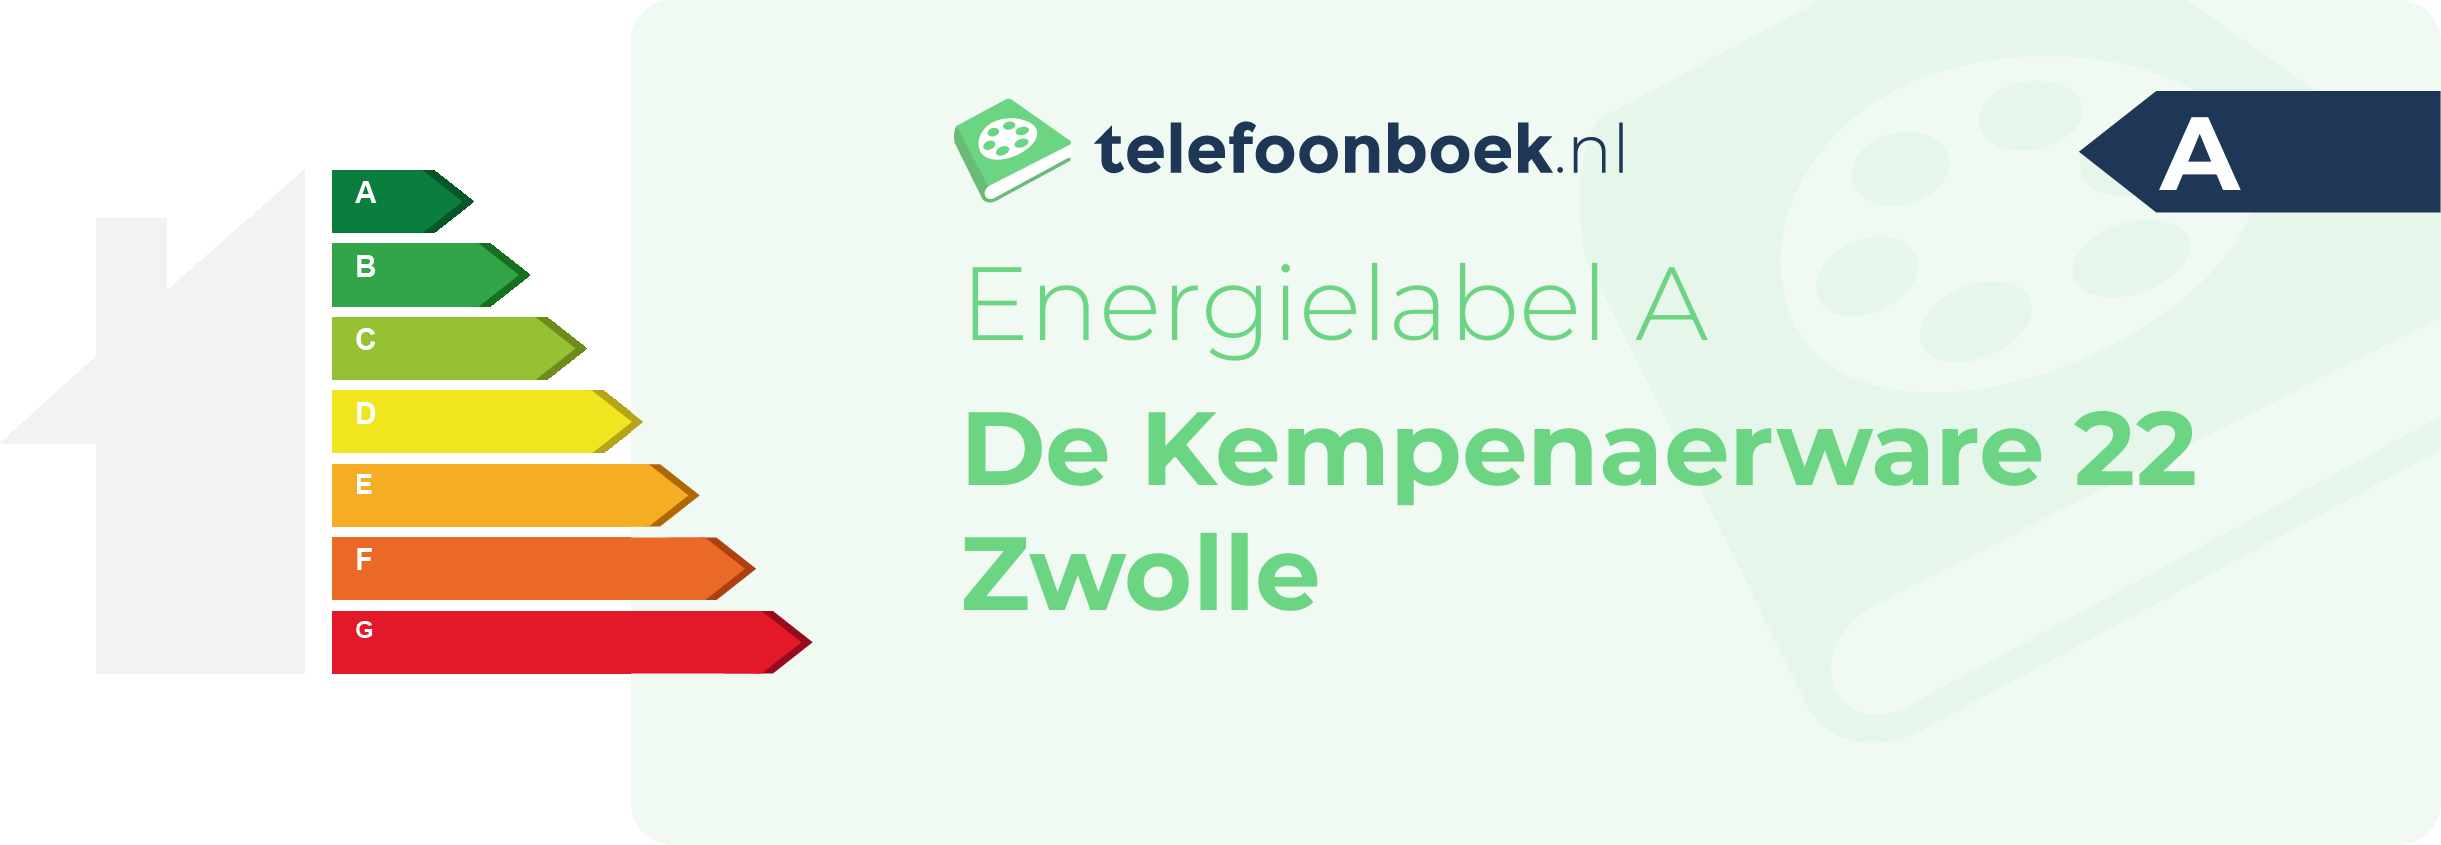 Energielabel De Kempenaerware 22 Zwolle